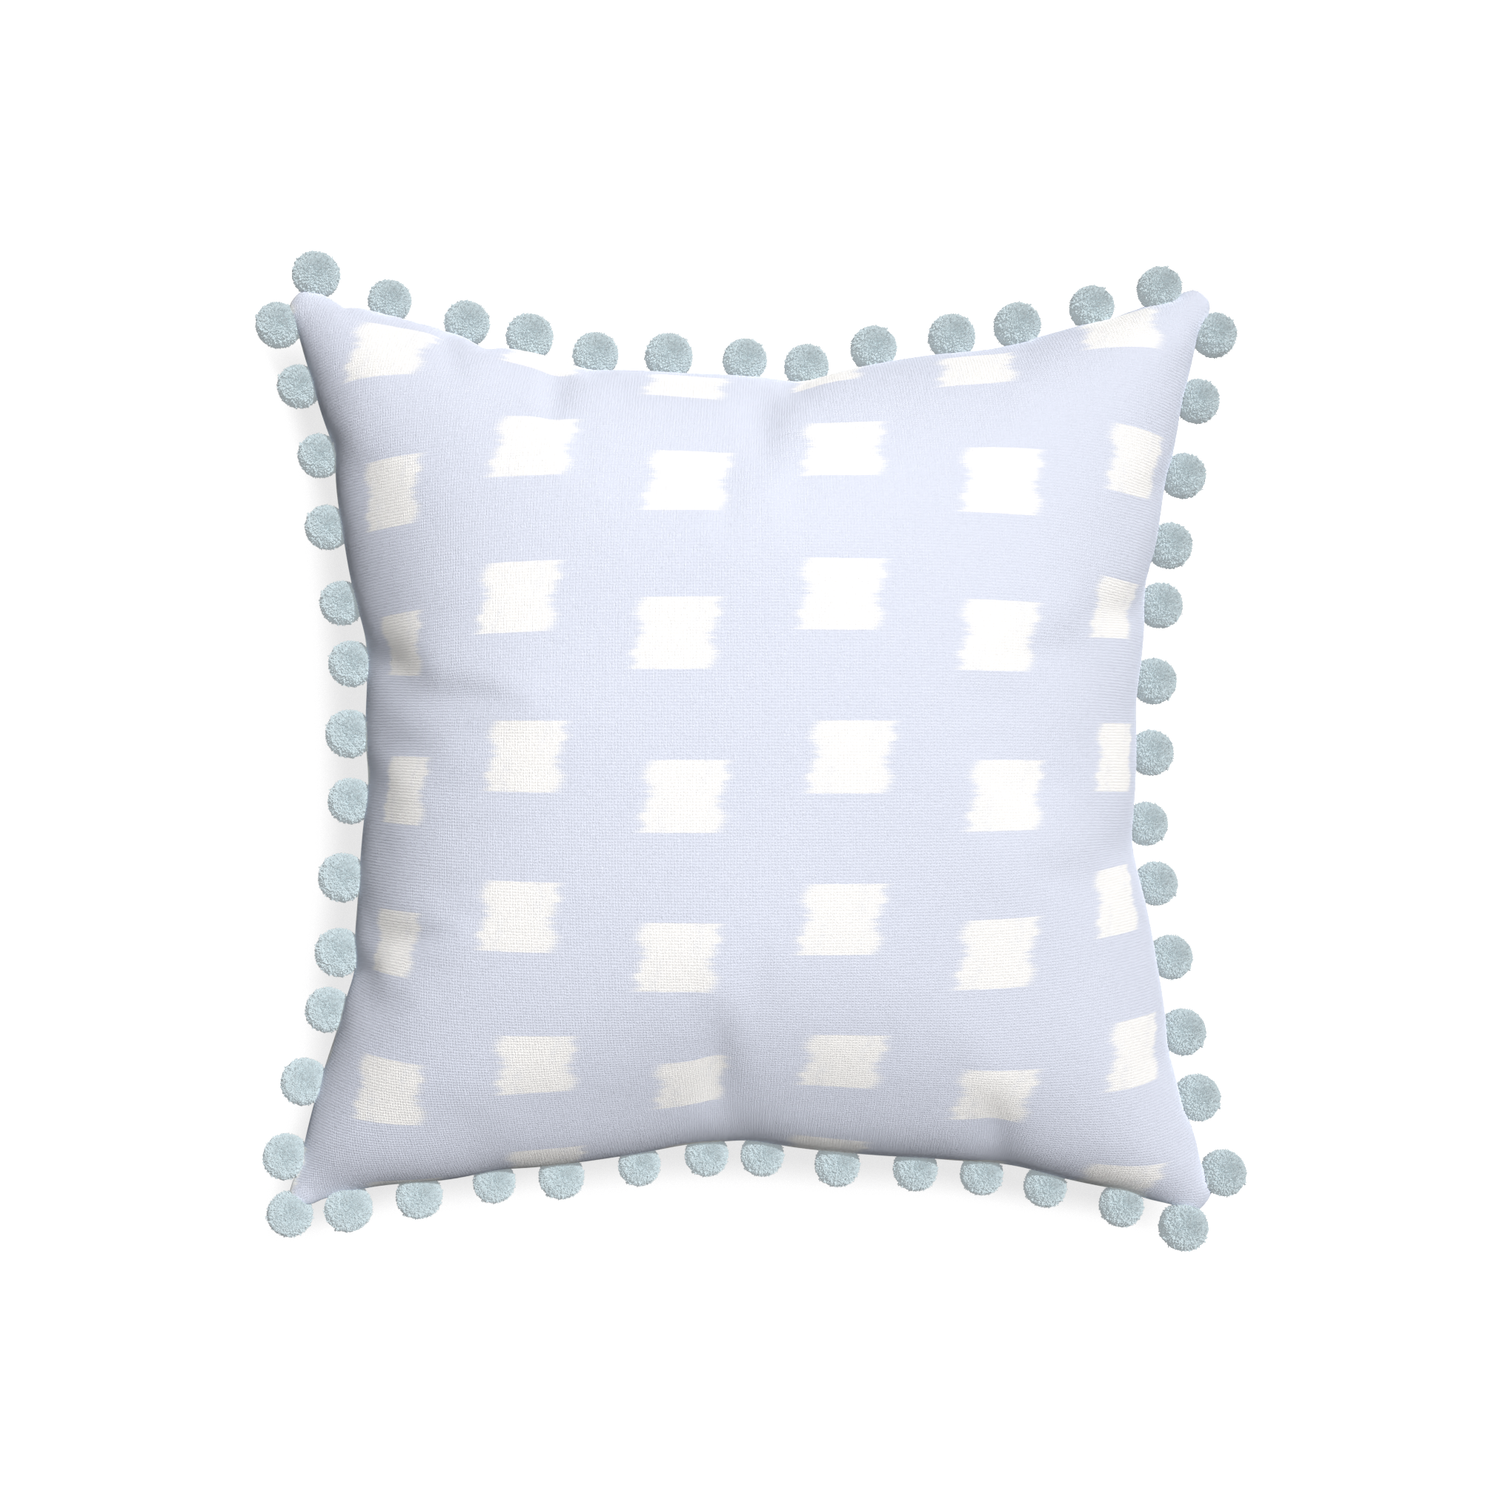 20-square denton custom sky blue patternpillow with powder pom pom on white background